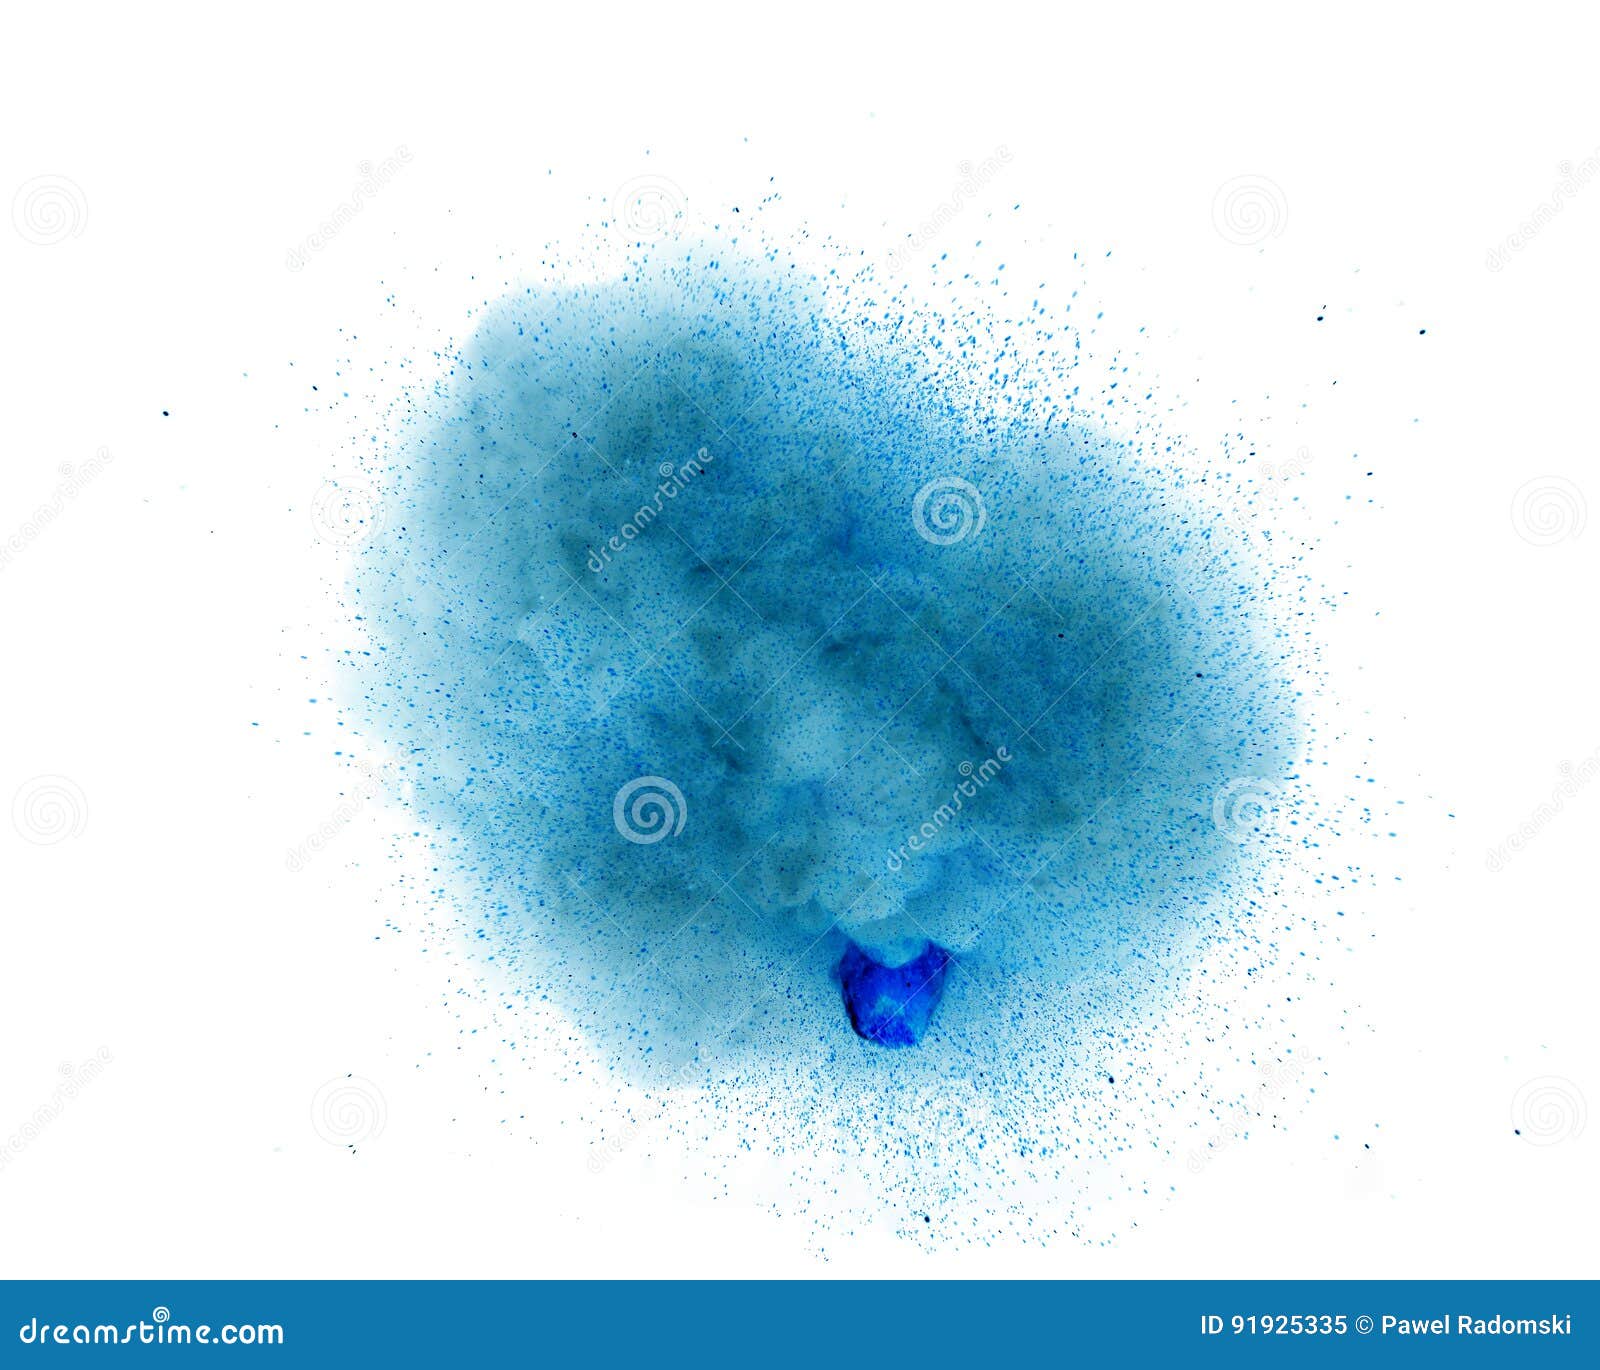 Blue Explosion Isolated On White Background Stock Image - Image of blow